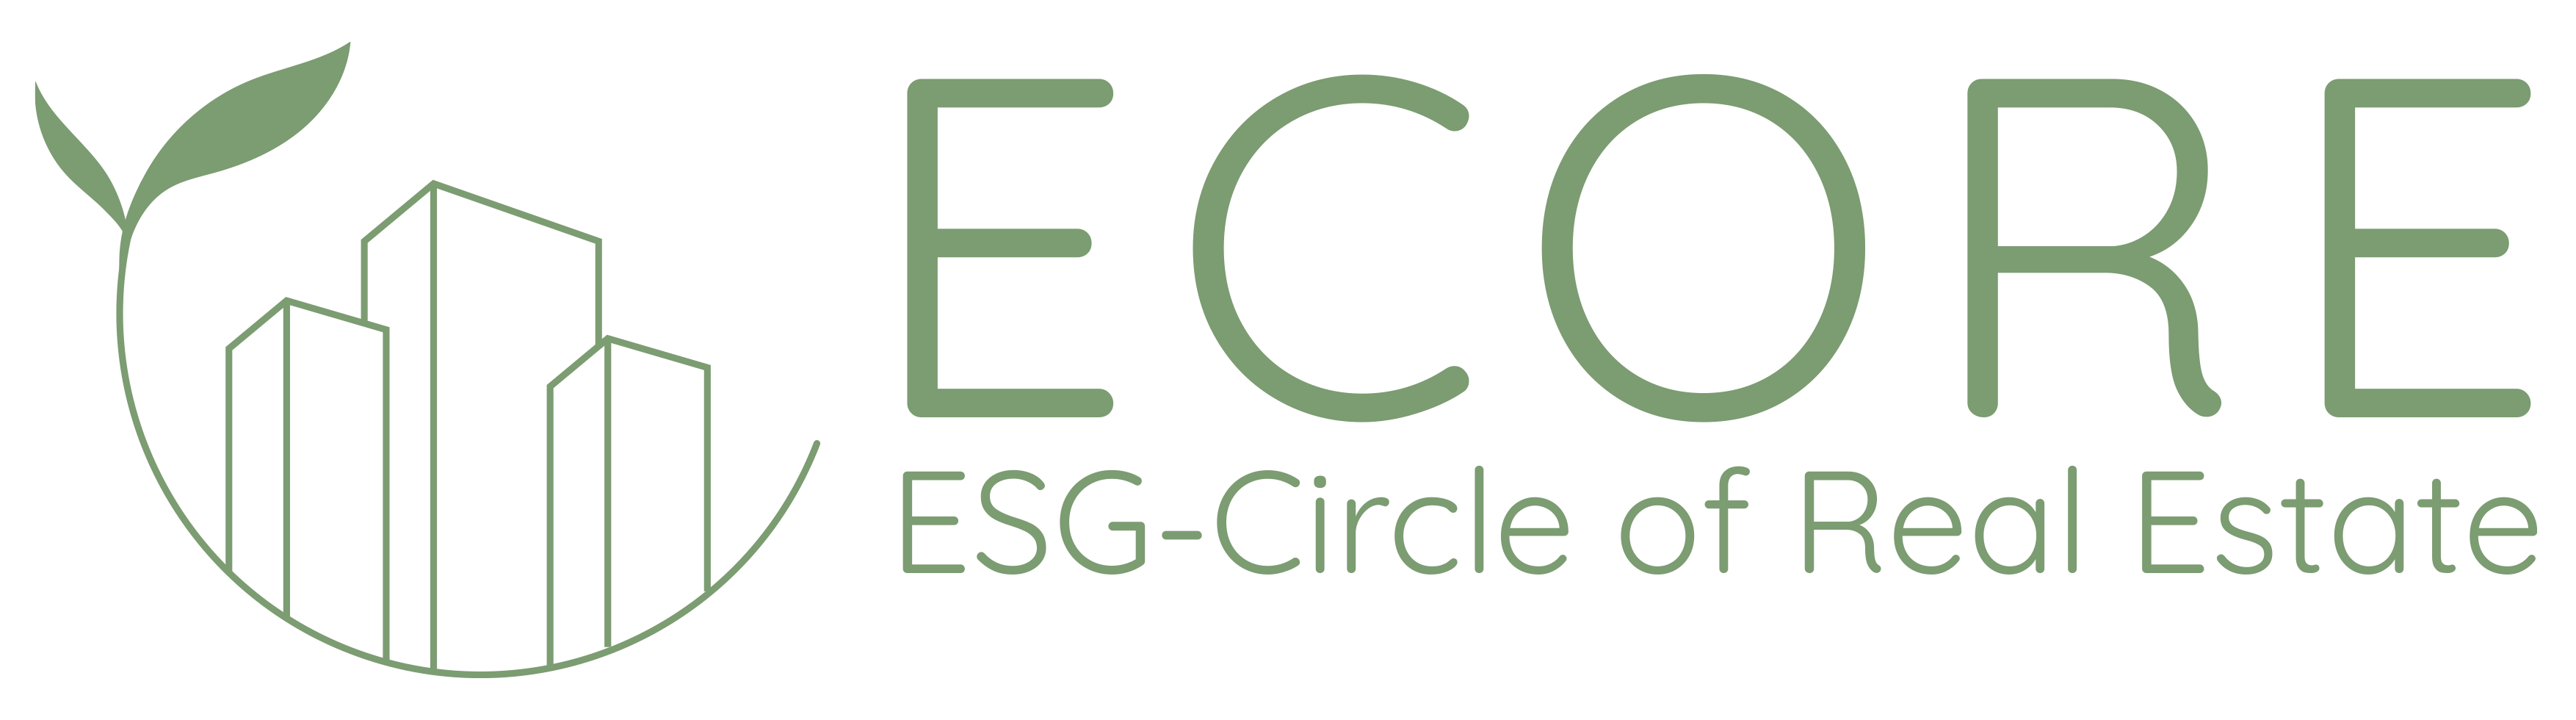 ECORE - ESG Circle of Real Estate